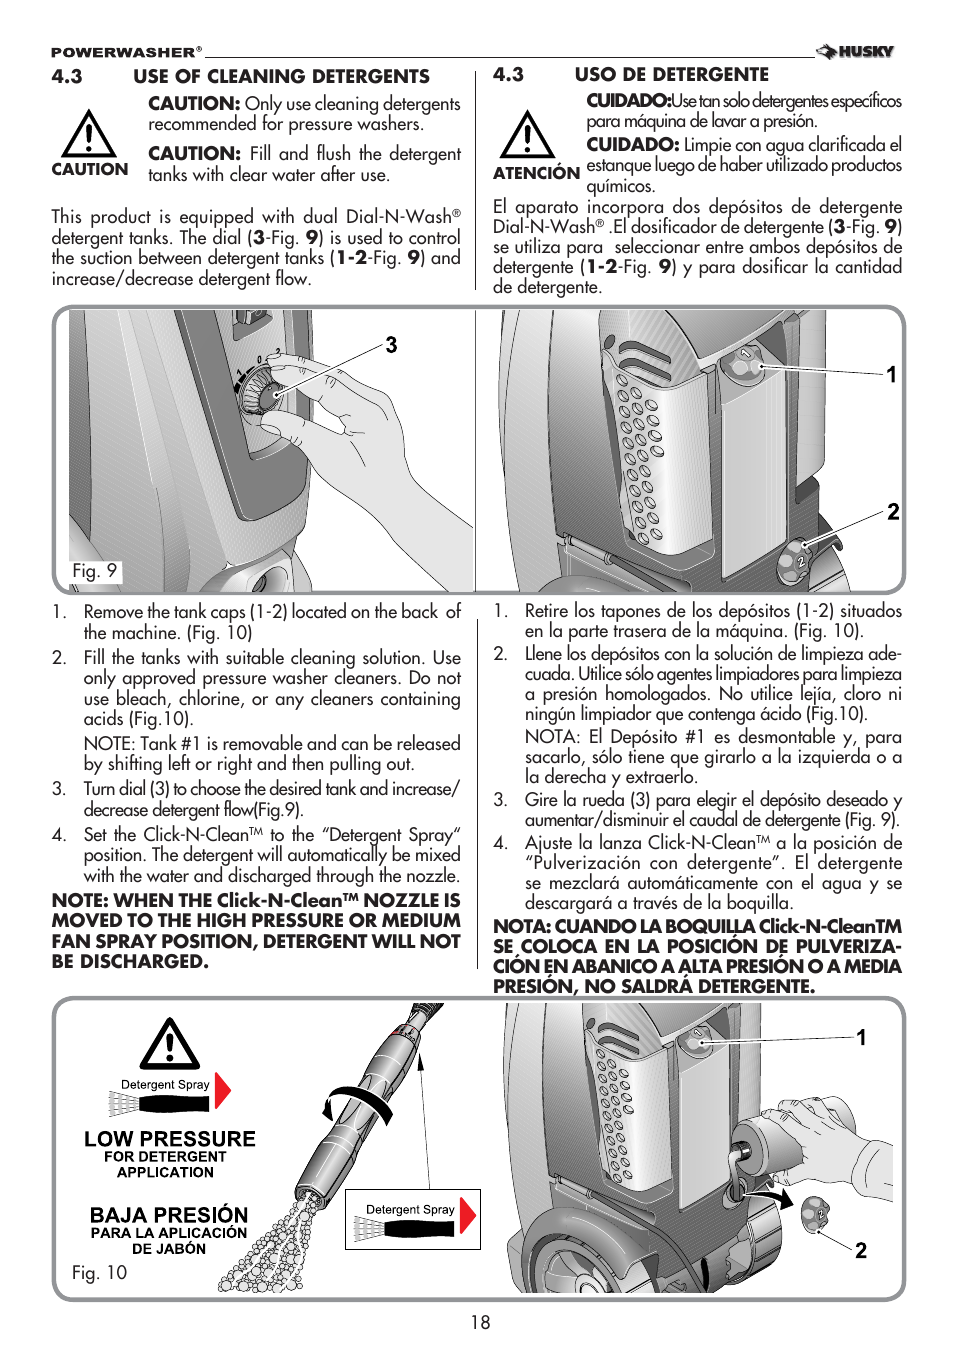 Husky POWERWASHER 1800PSI User Manual | Page 18 / 36